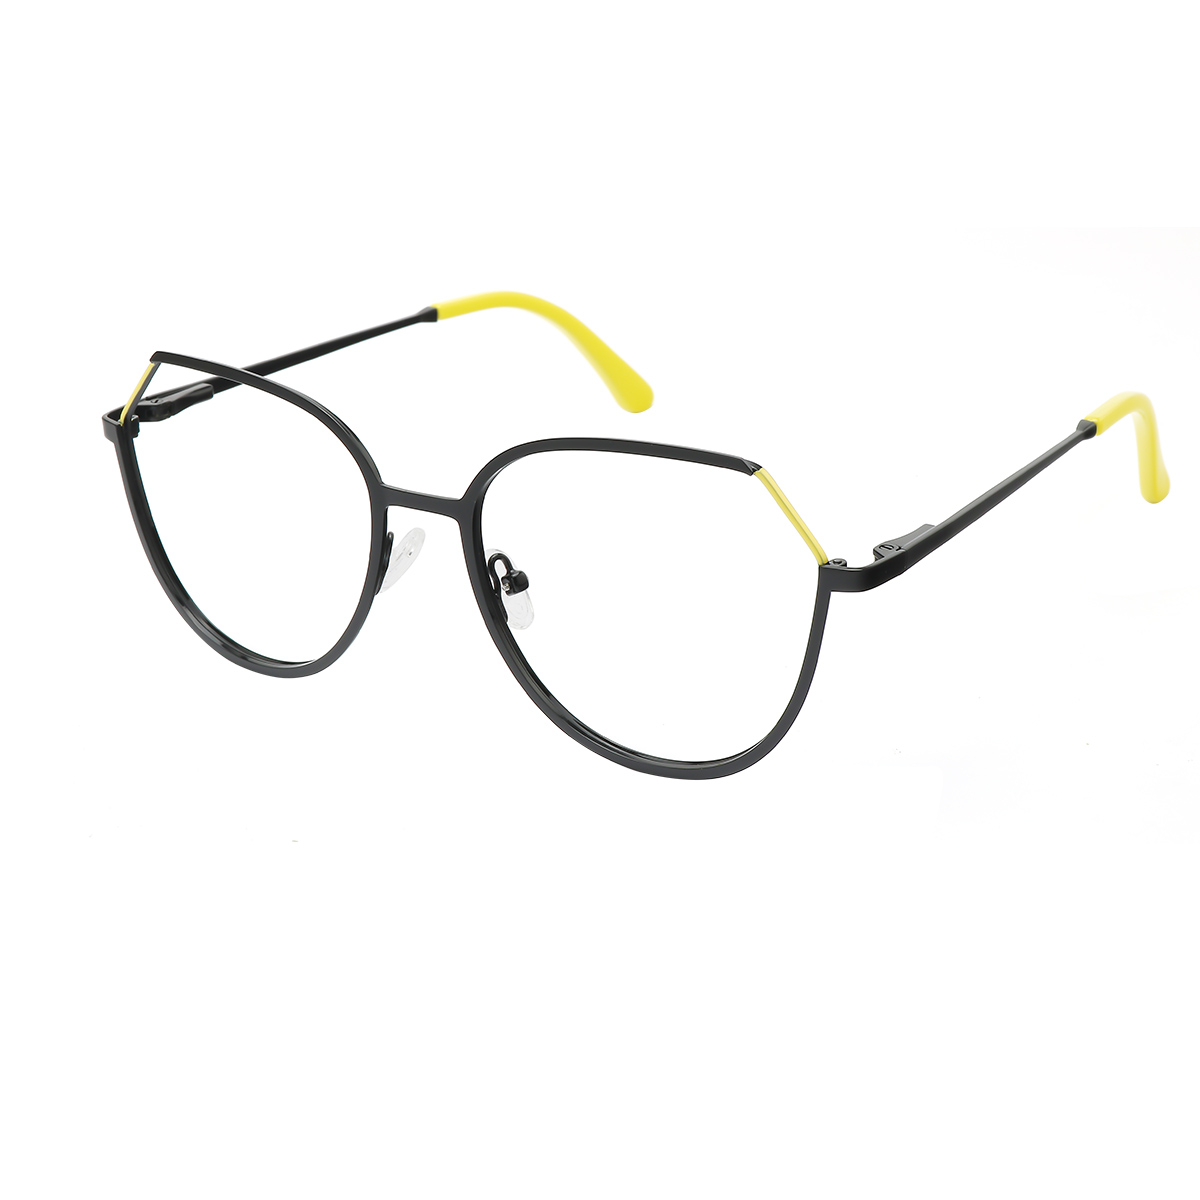 Persis - Geometric Black/Yellow Reading Glasses for Women